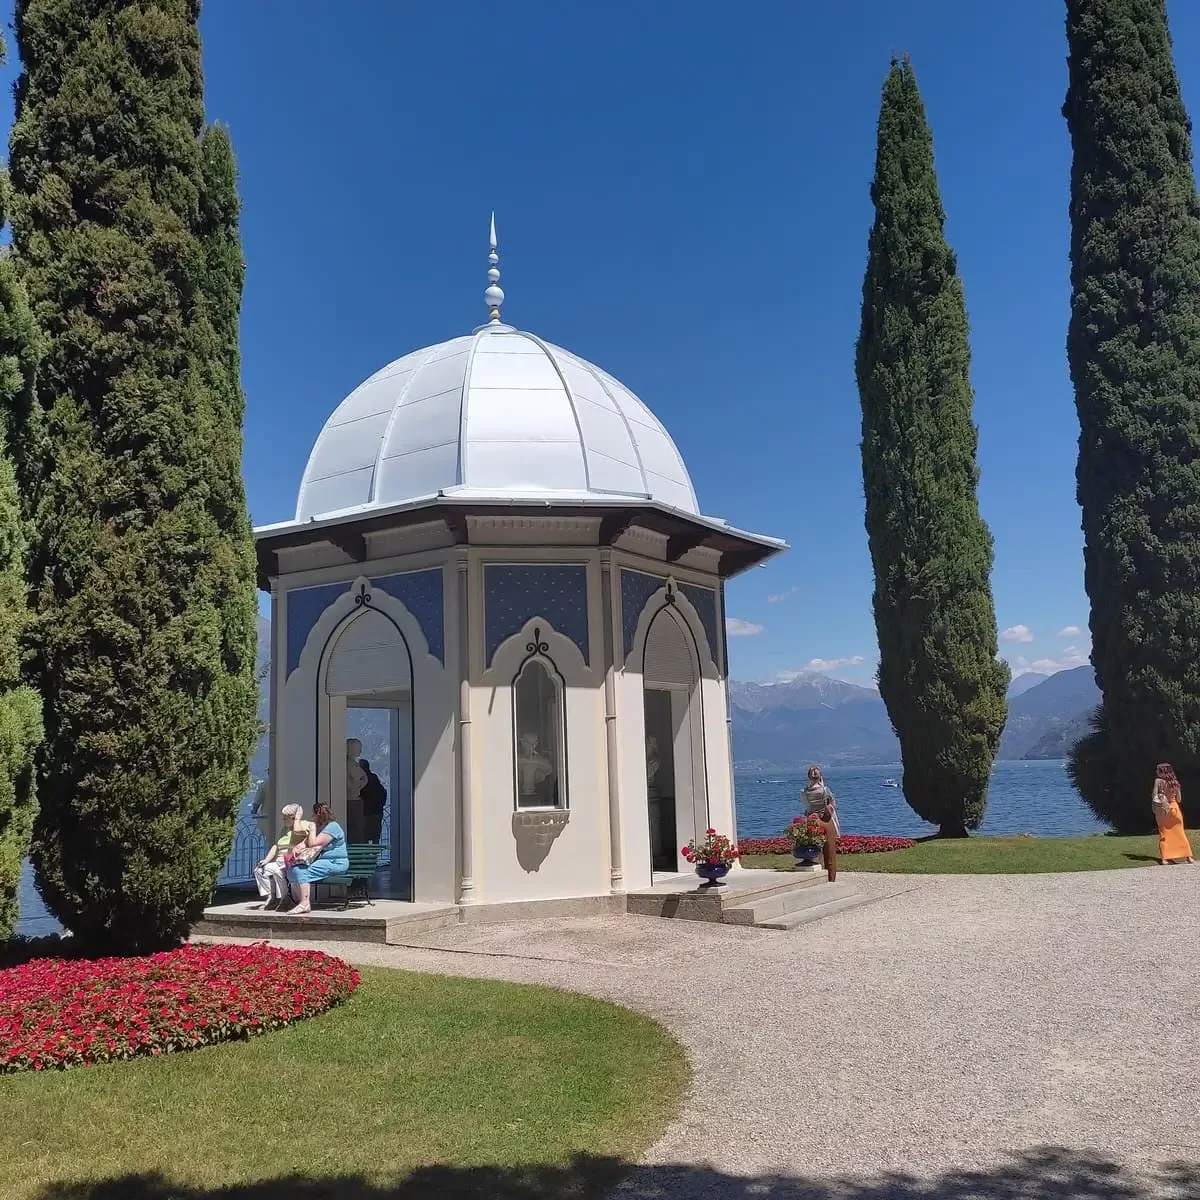 Moorish Pavilion of Melzi Gardens in Bellagio, Lake Como, with view of lake and mountains